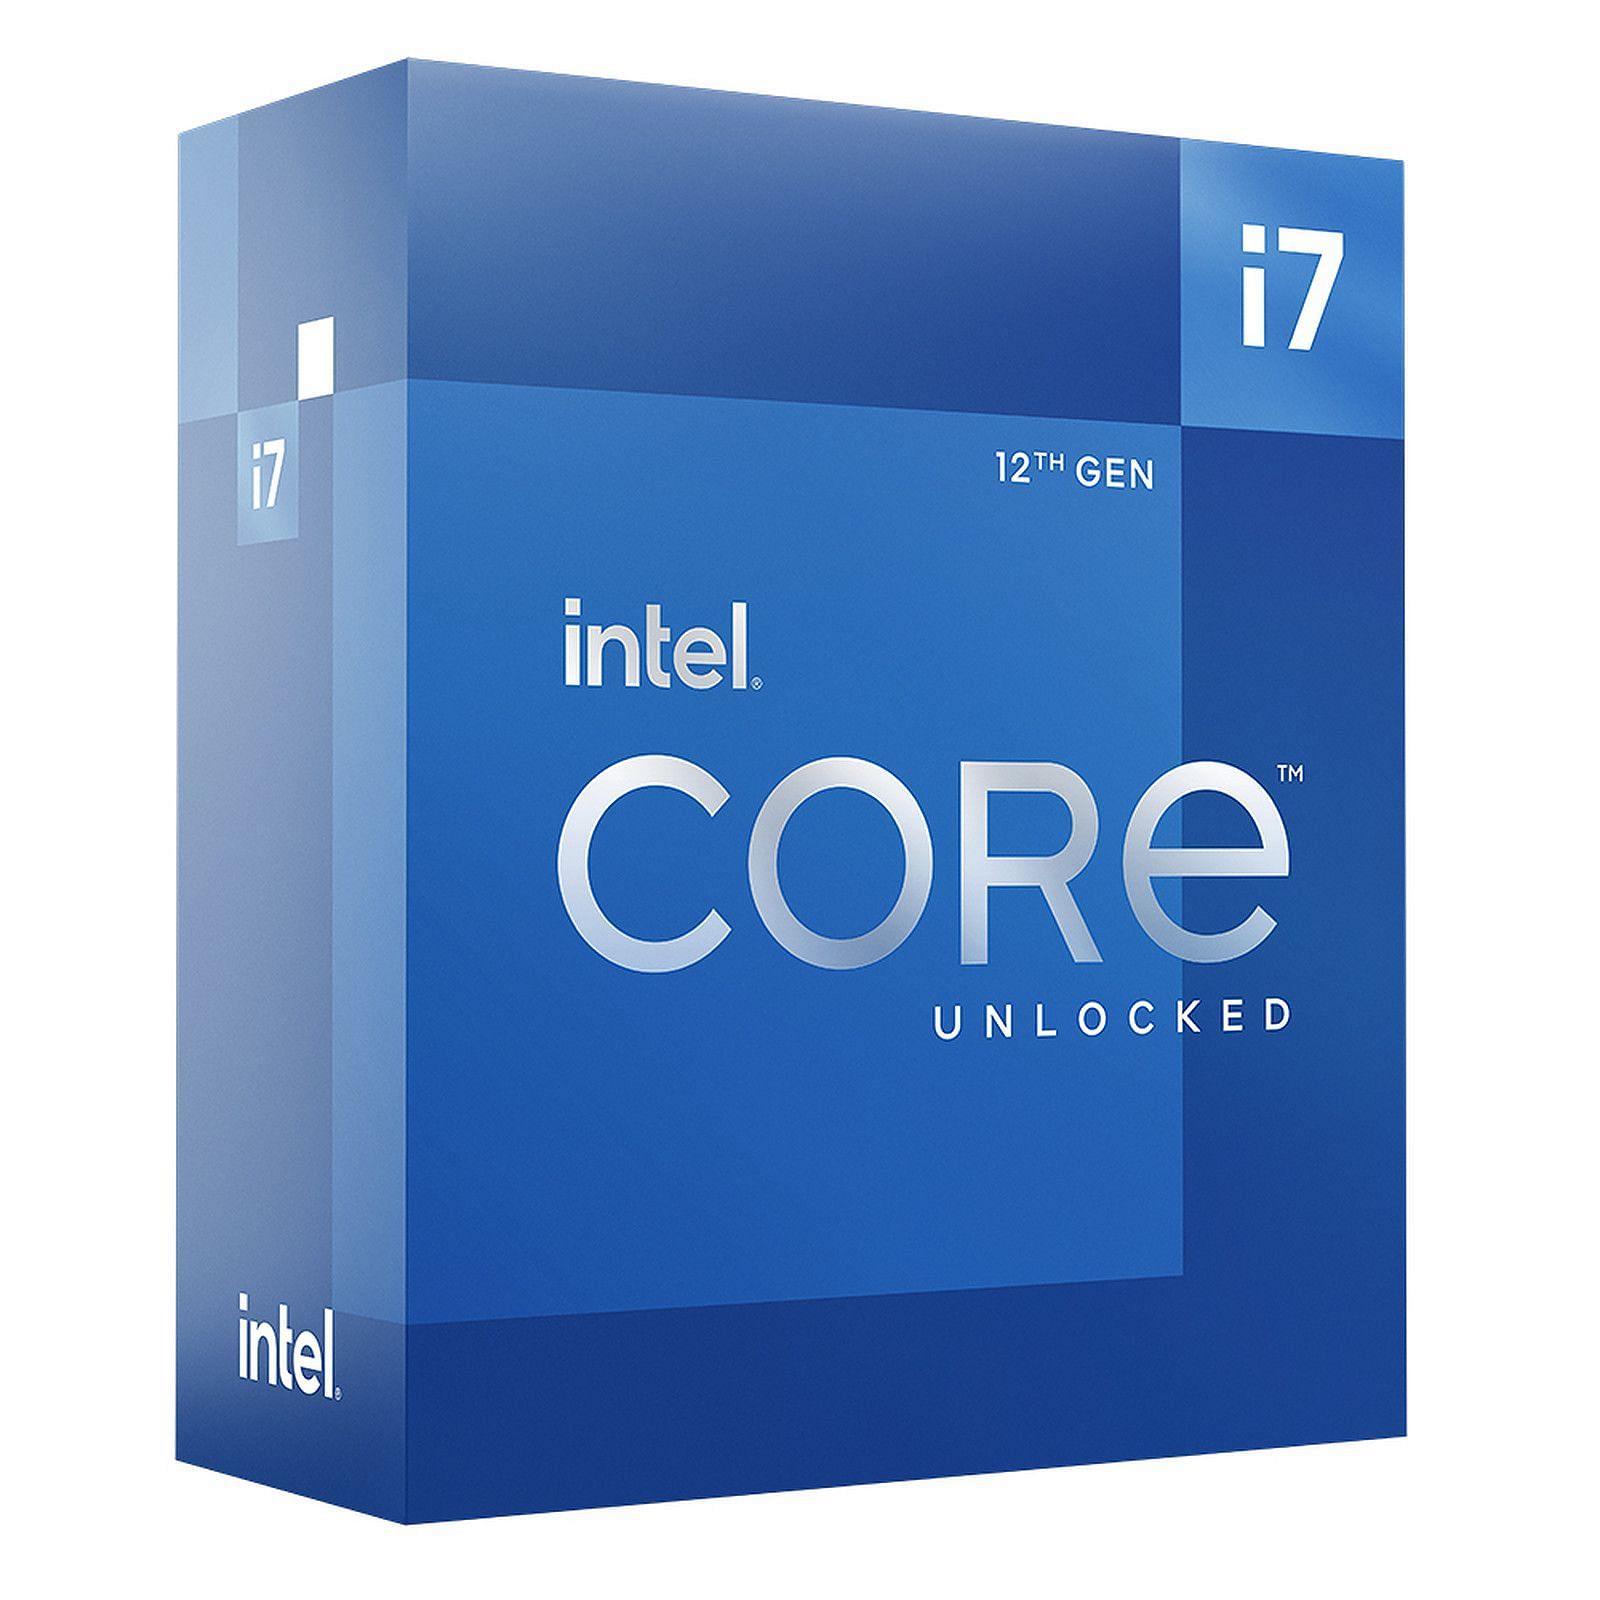 Intel Core i7-12700K (Image via Amazon)